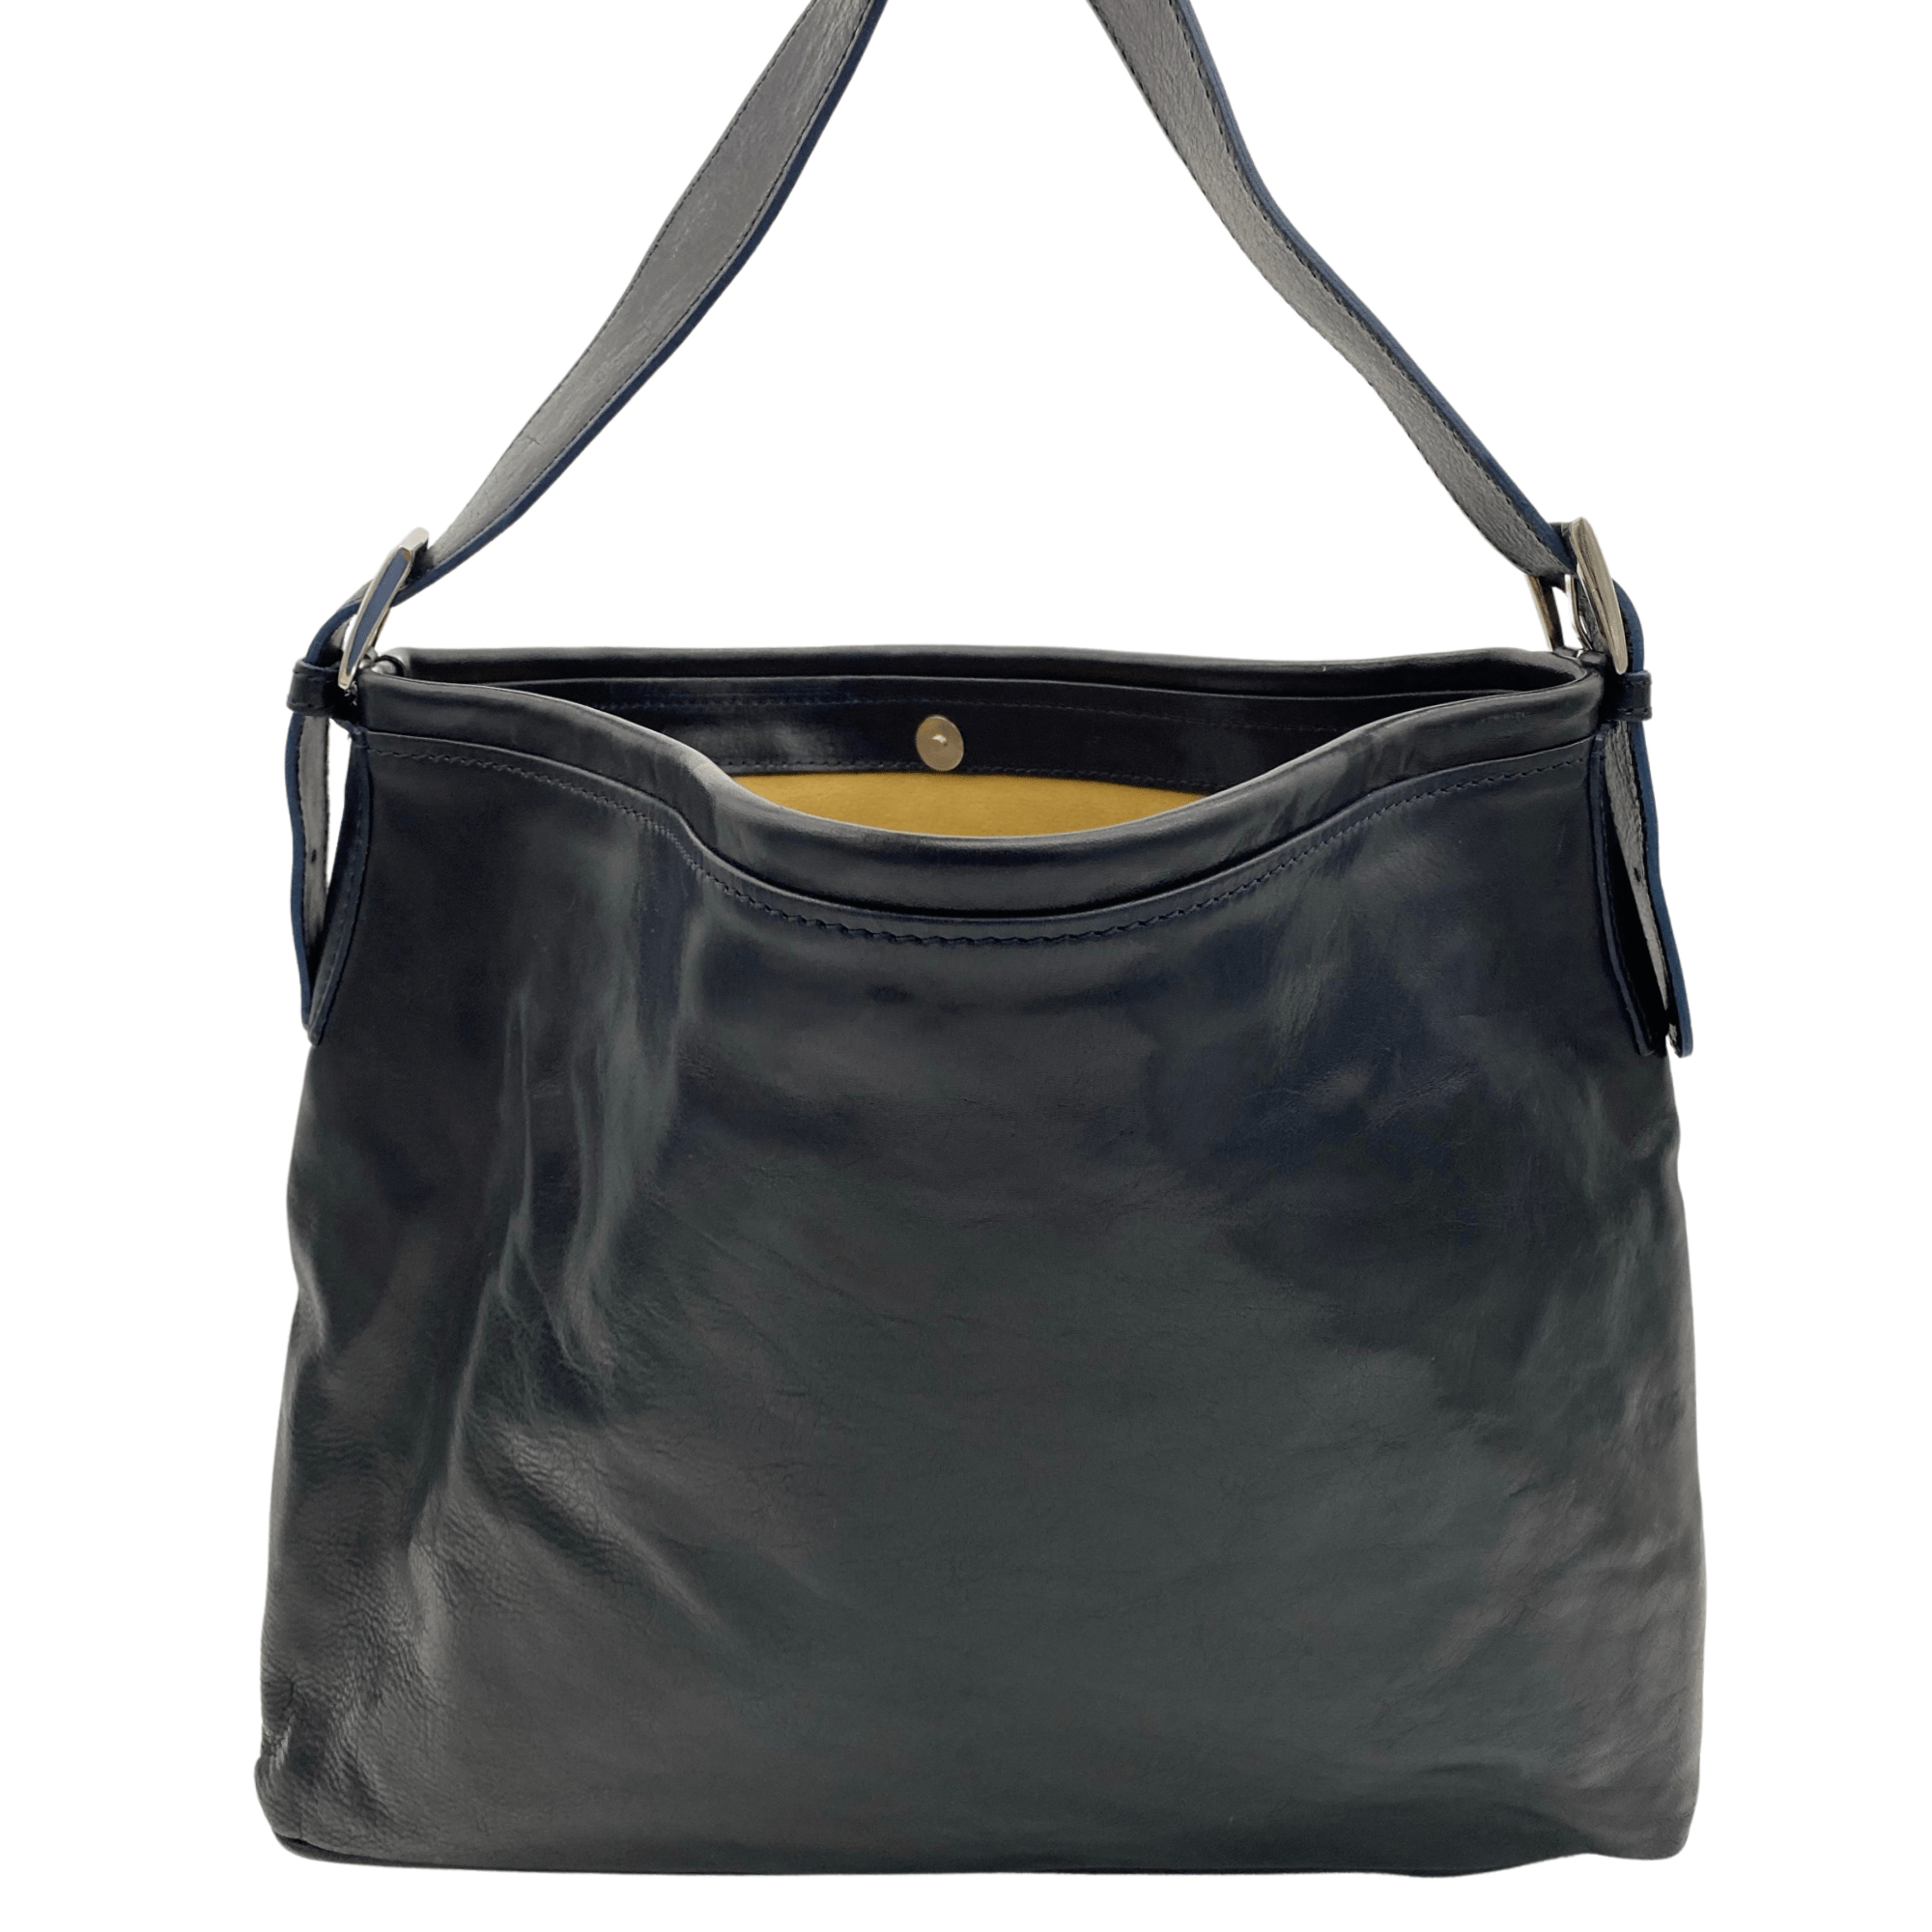 Merci Marie Handbag Italian Leather Gray